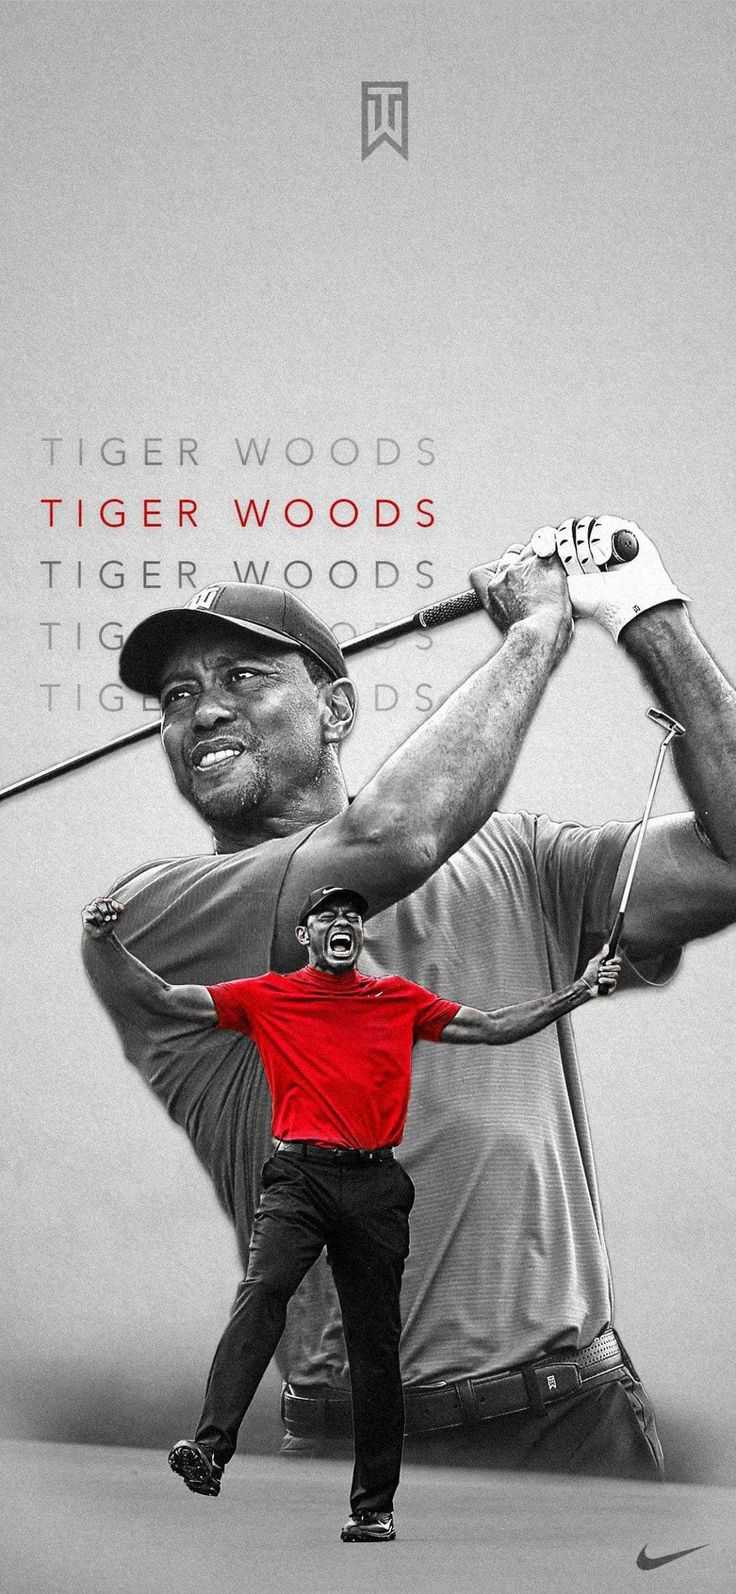 Iphone Tiger Woods Wallpaper 1